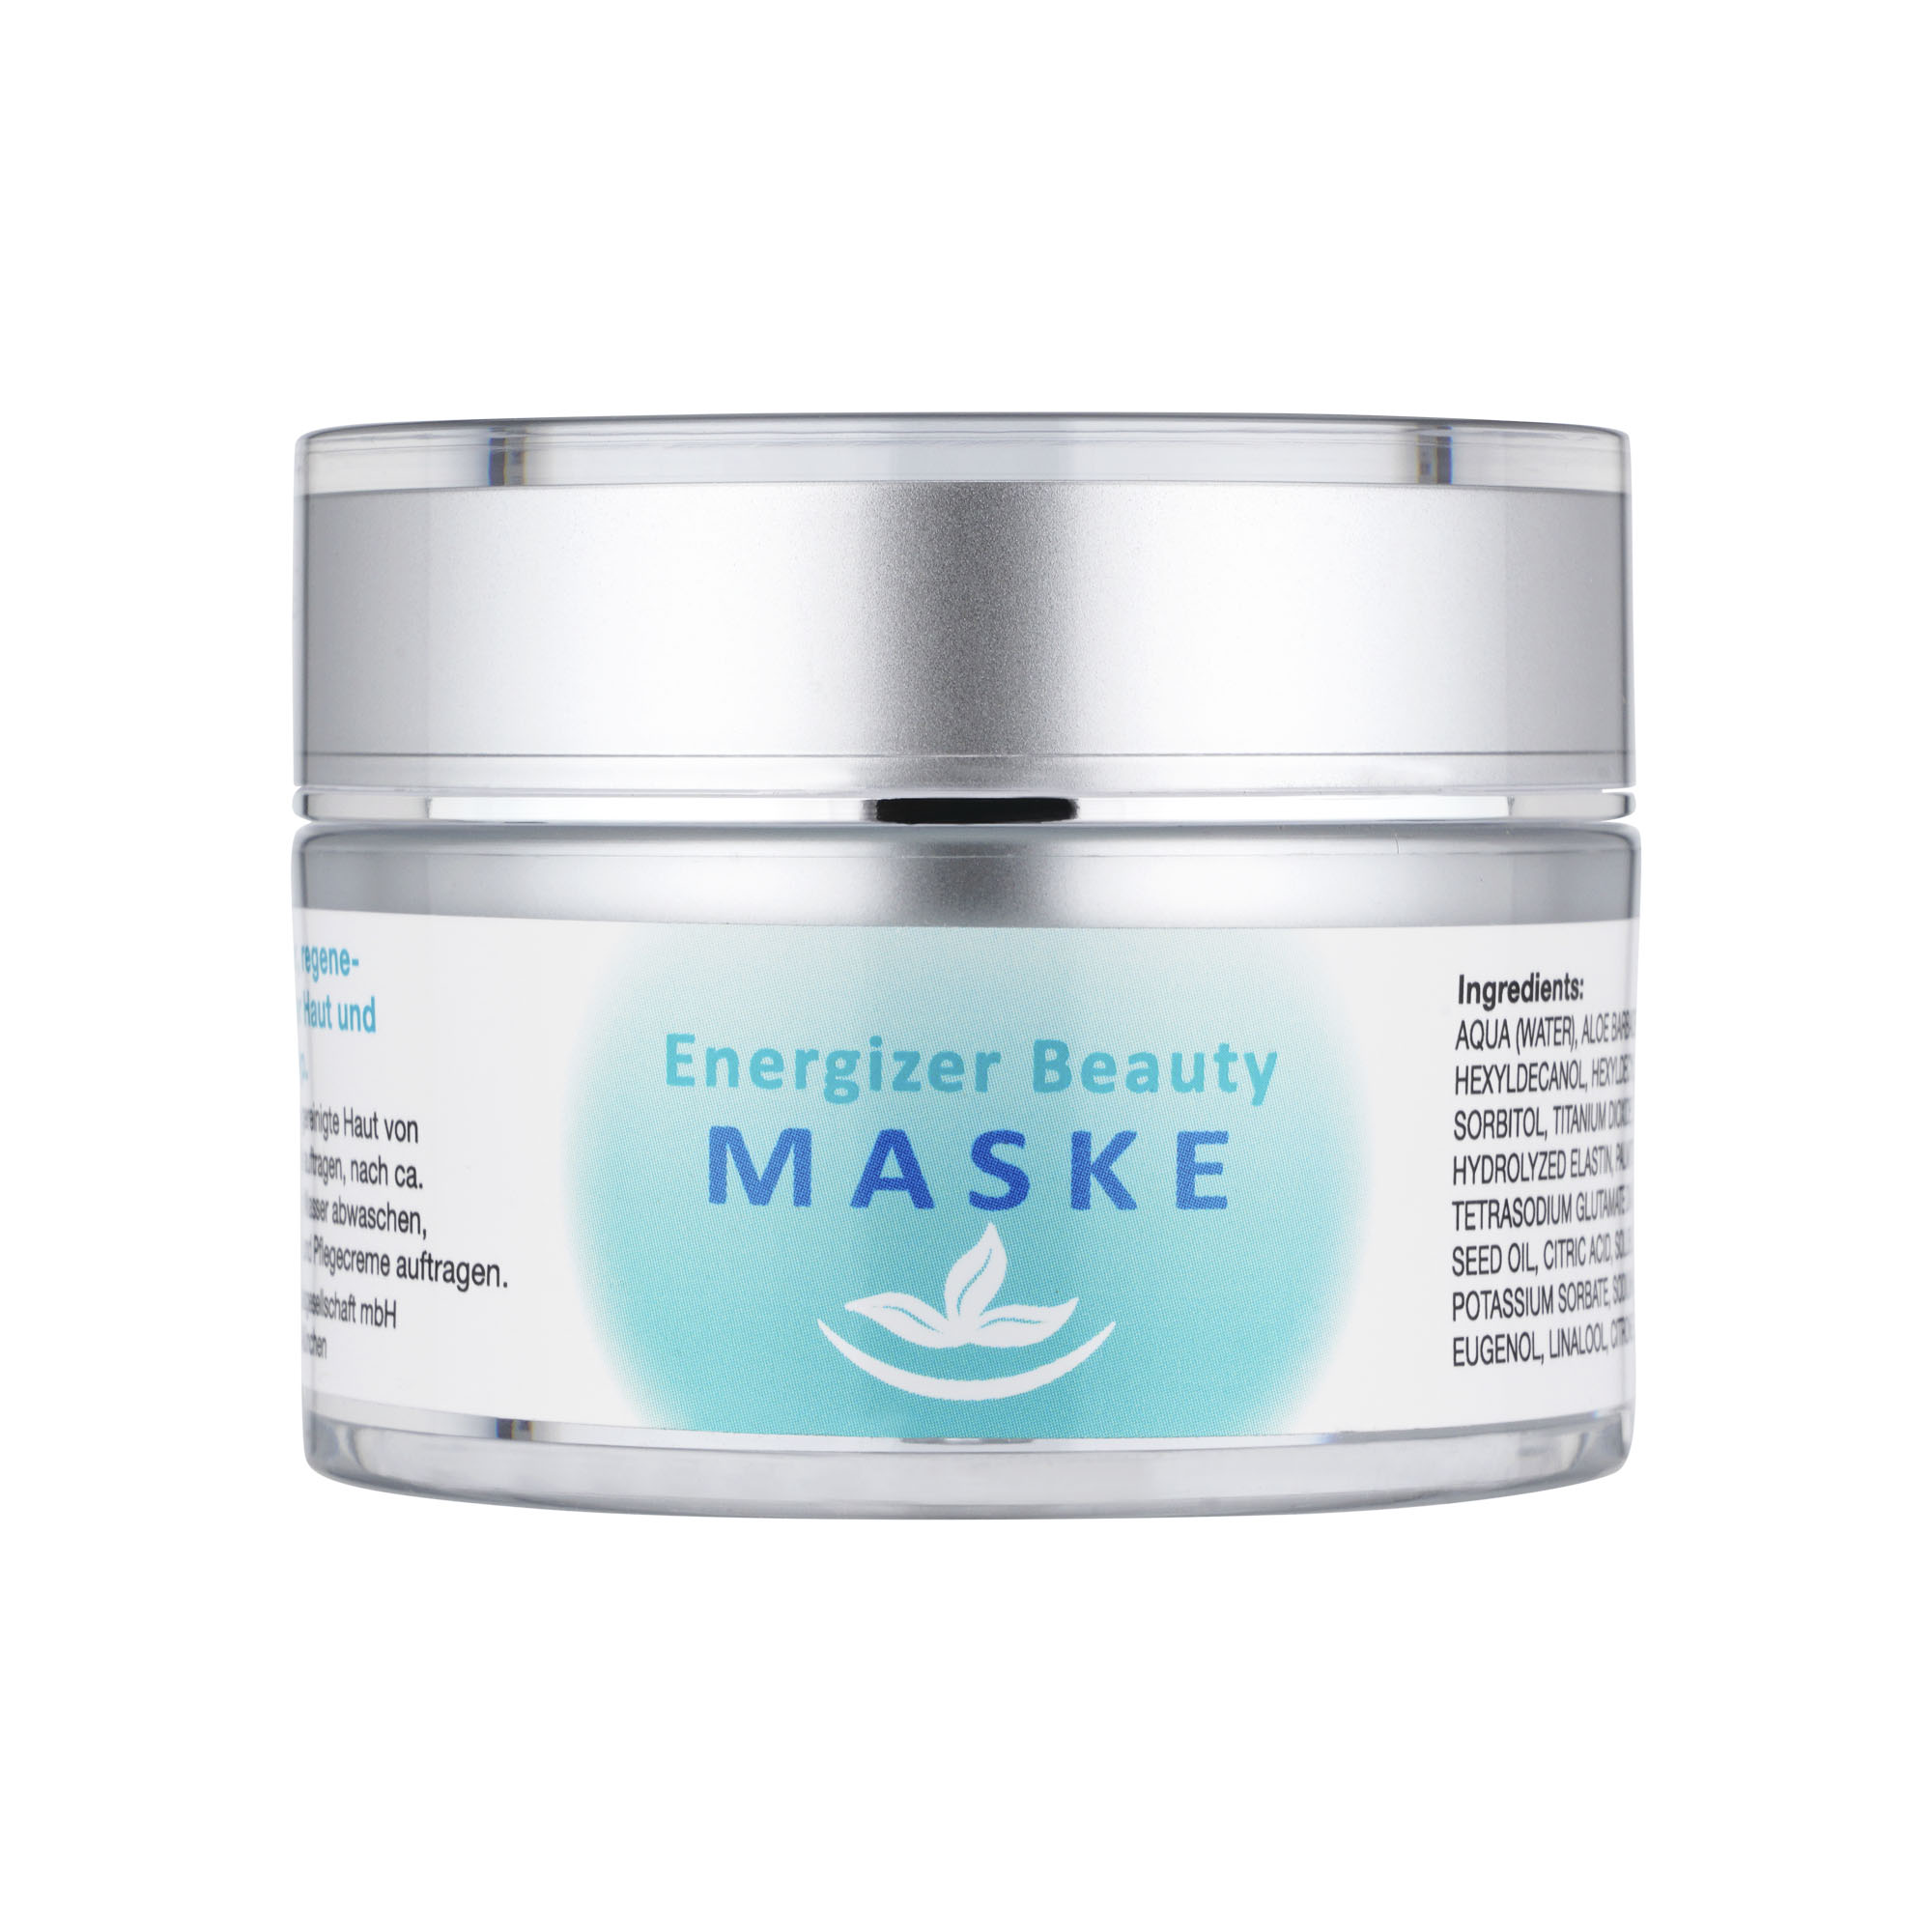 Energizer Beauty Mask